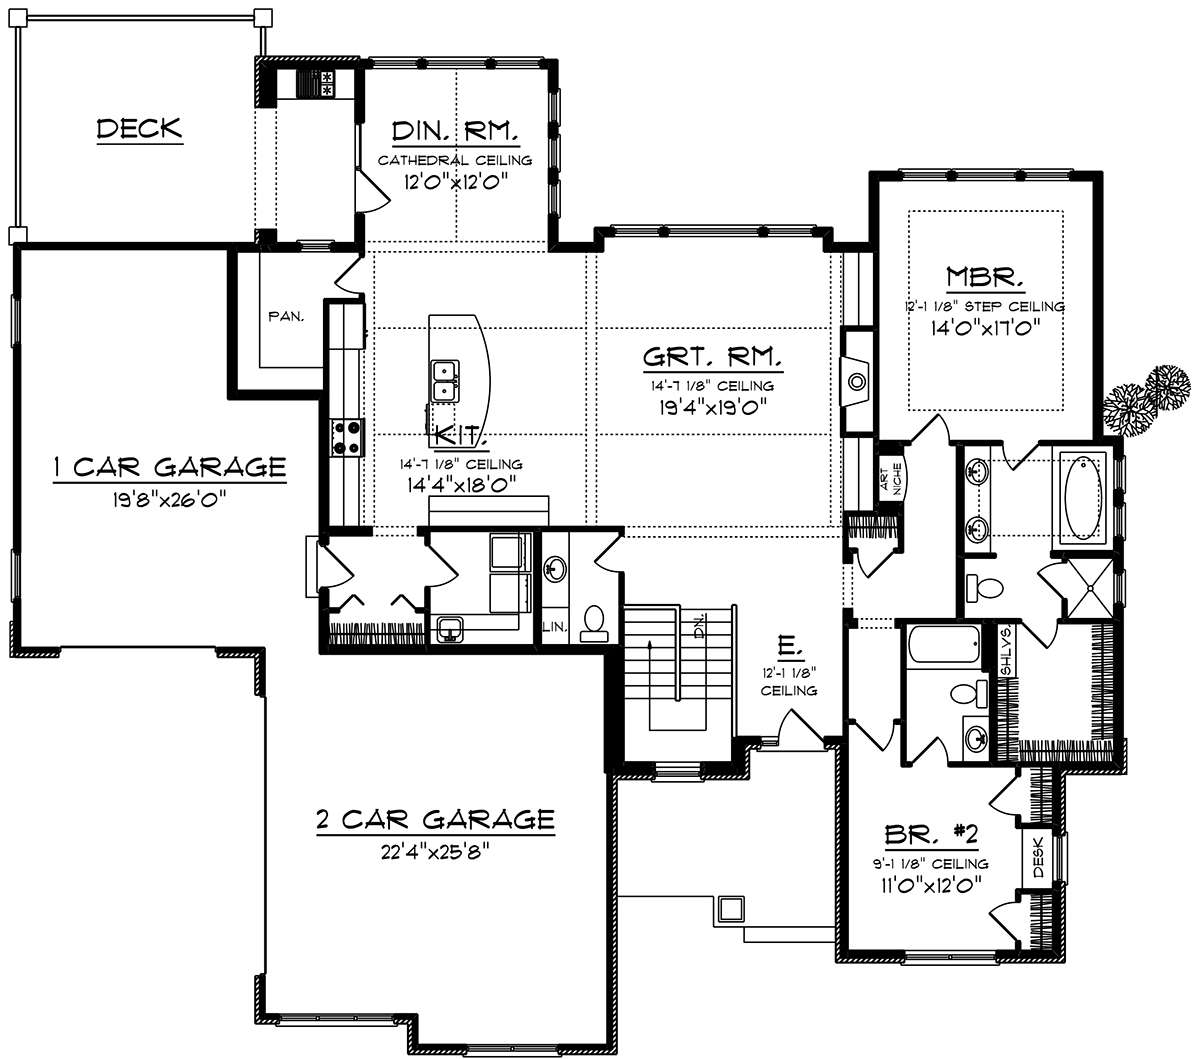 Main Floor for House Plan #1020-00030